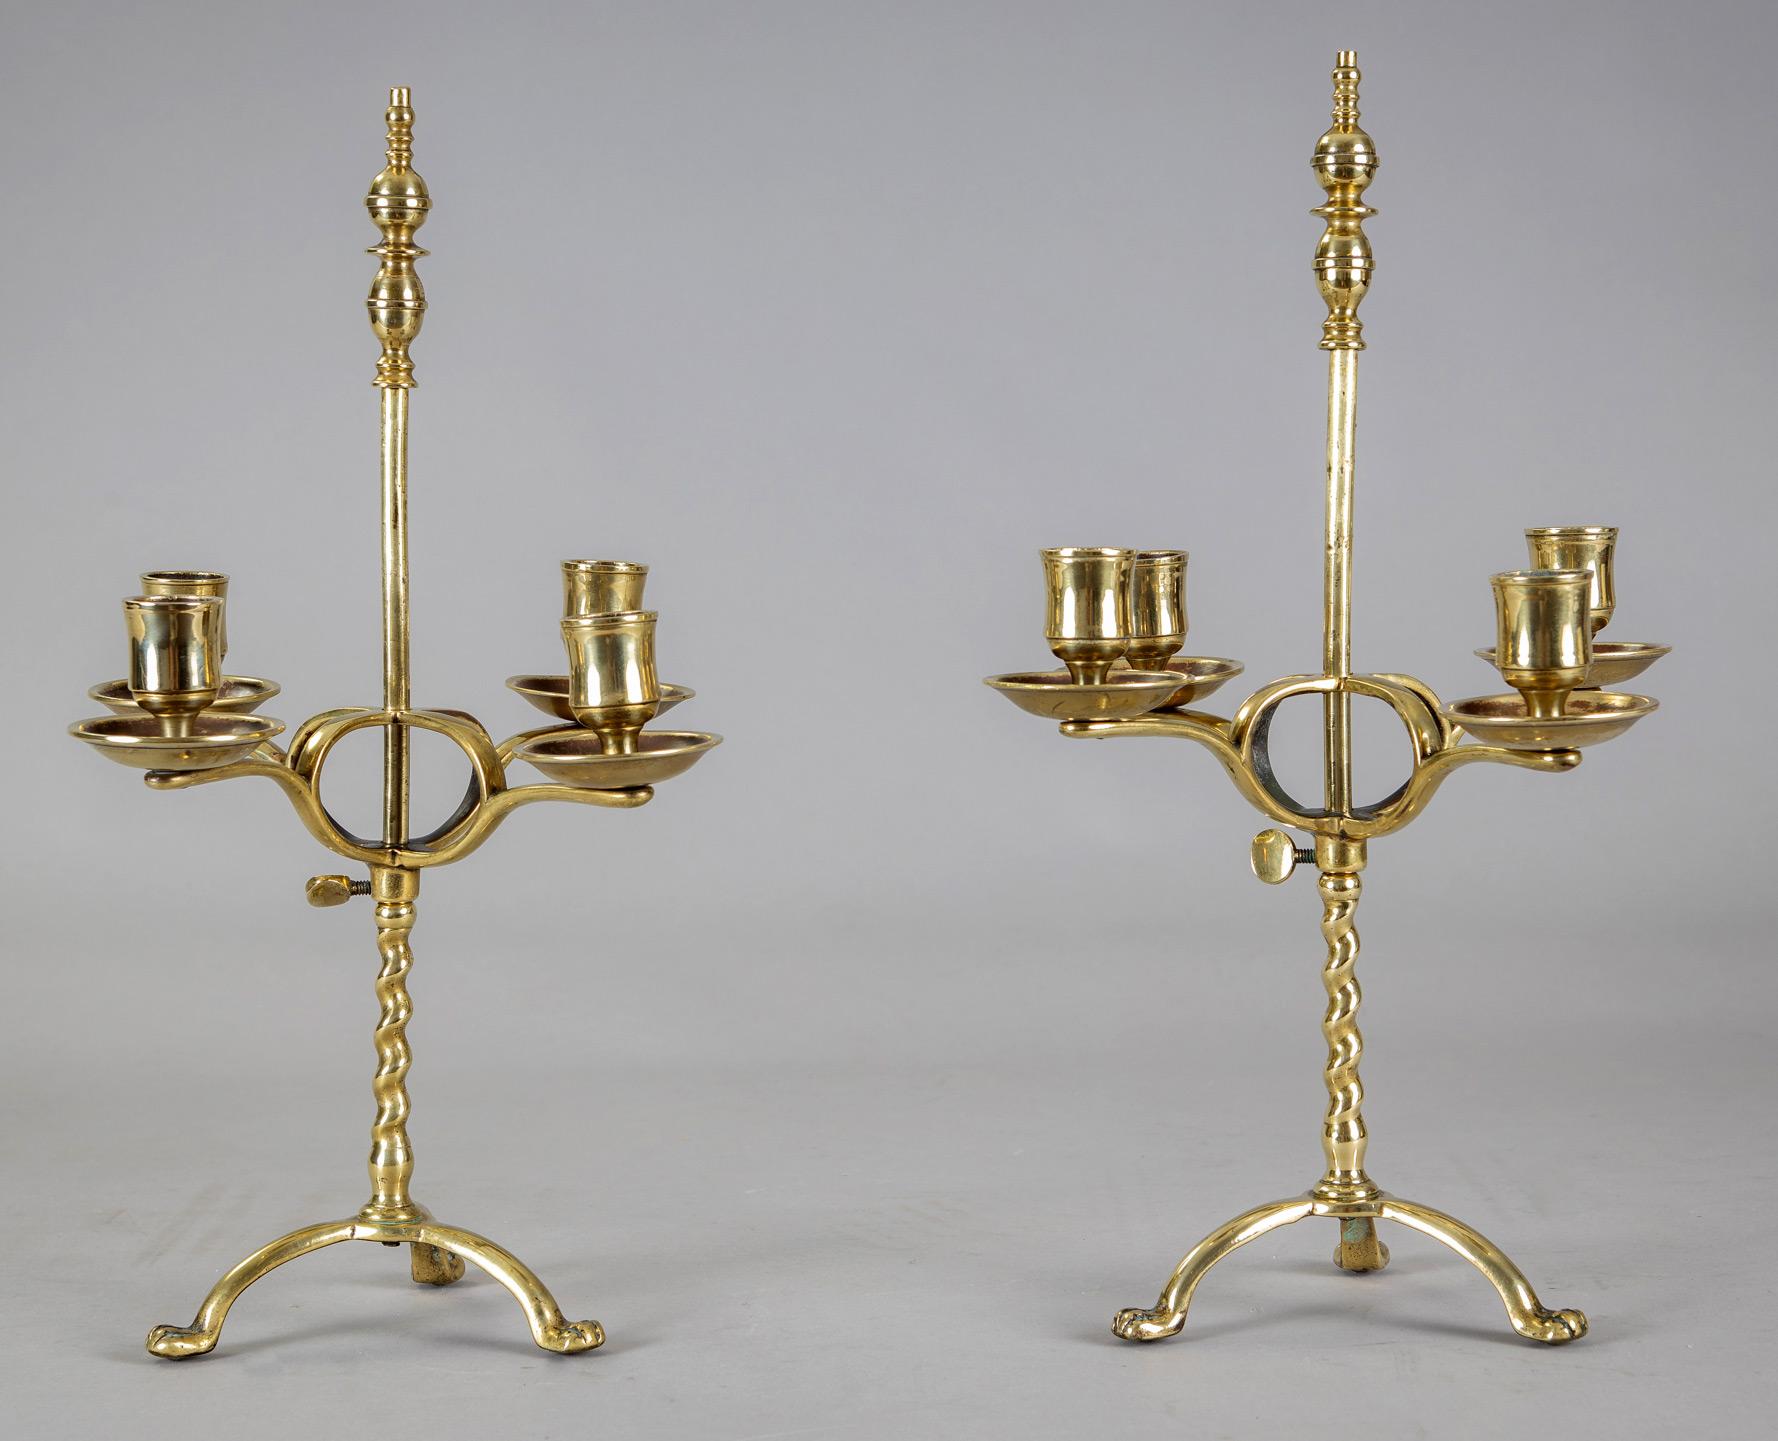 Antique English Brass Adjustable Candelabra, Pair For Sale 1